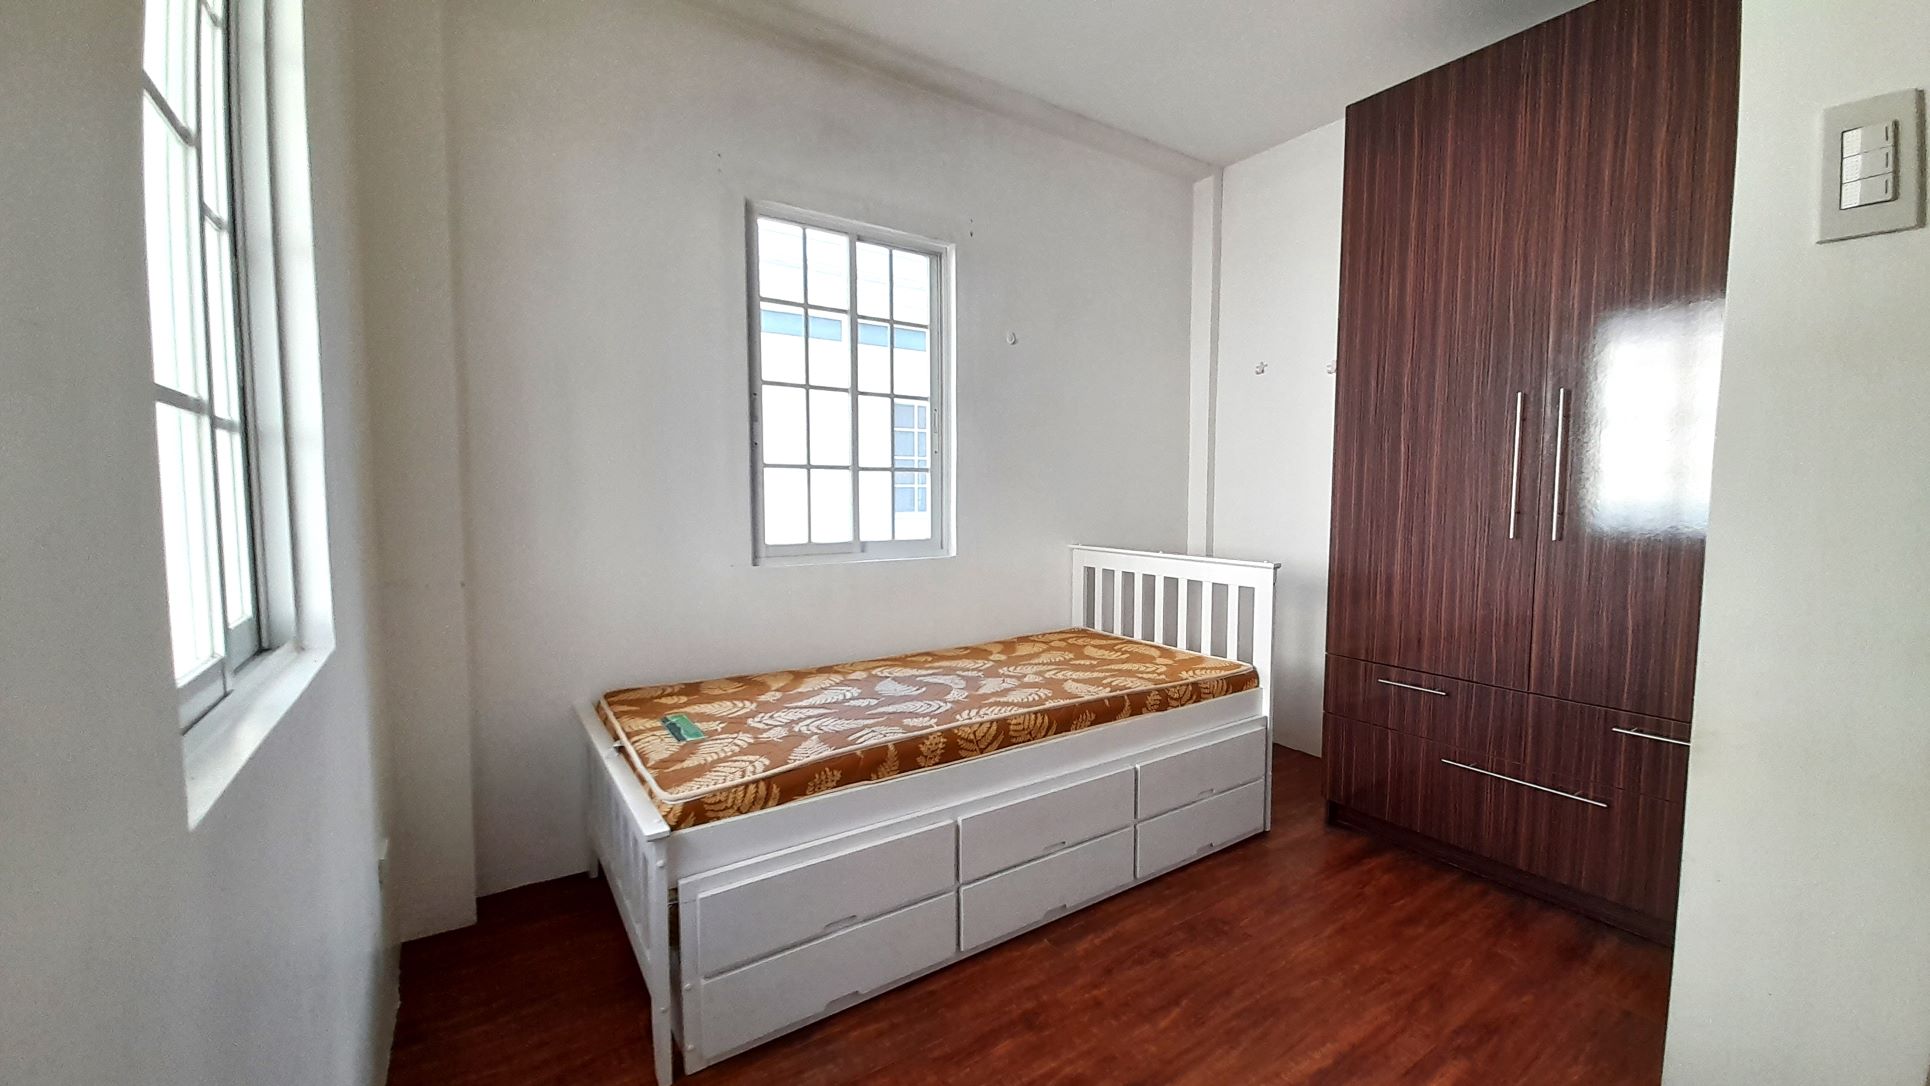 3-bedroom-semi-furnished-house-in-banawa-cebu-city